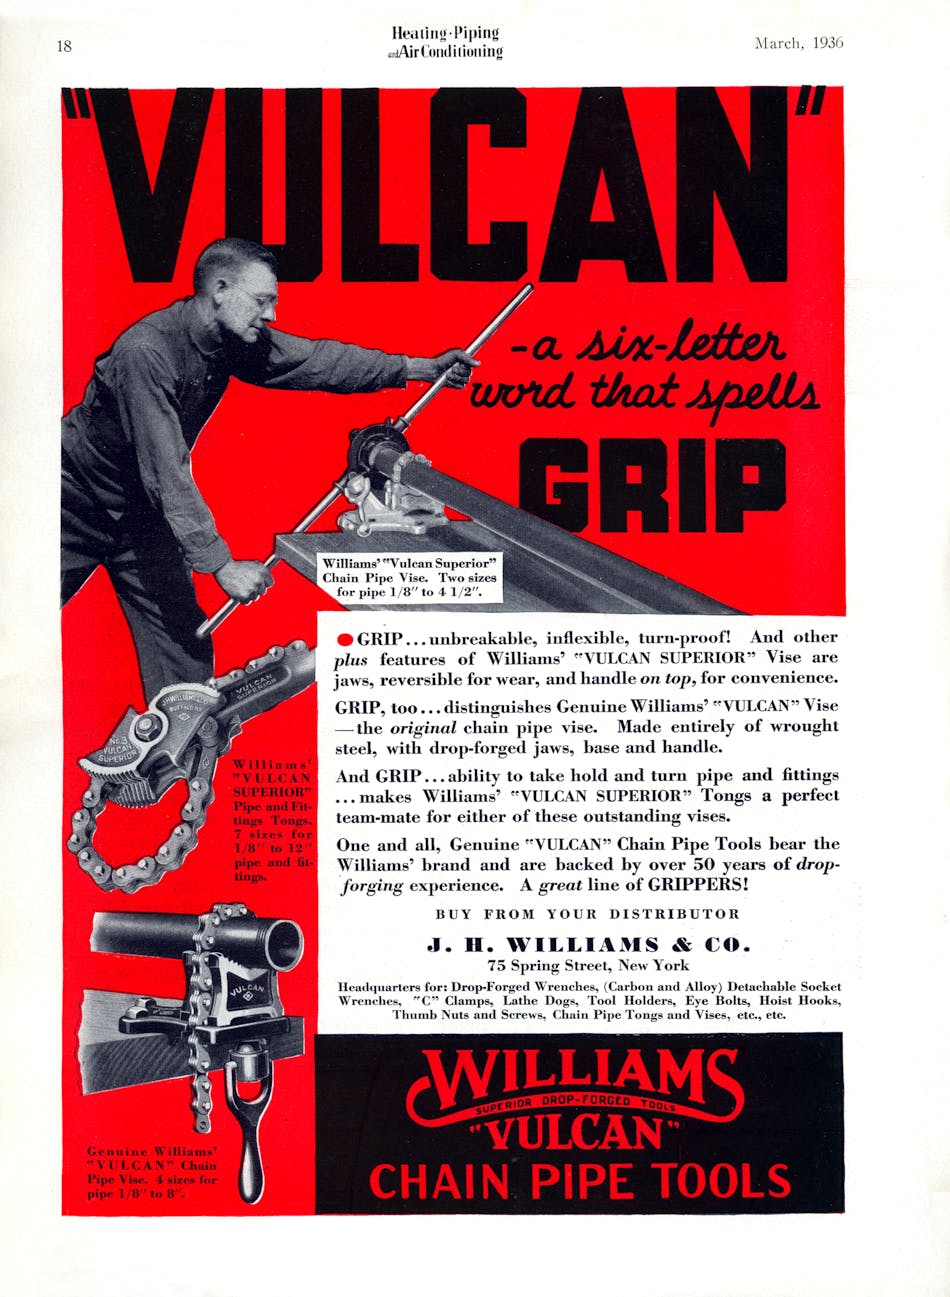 Hpac Com Sites Hpac com Files Uploads 2015 03 6 williams Vulcan March 1936